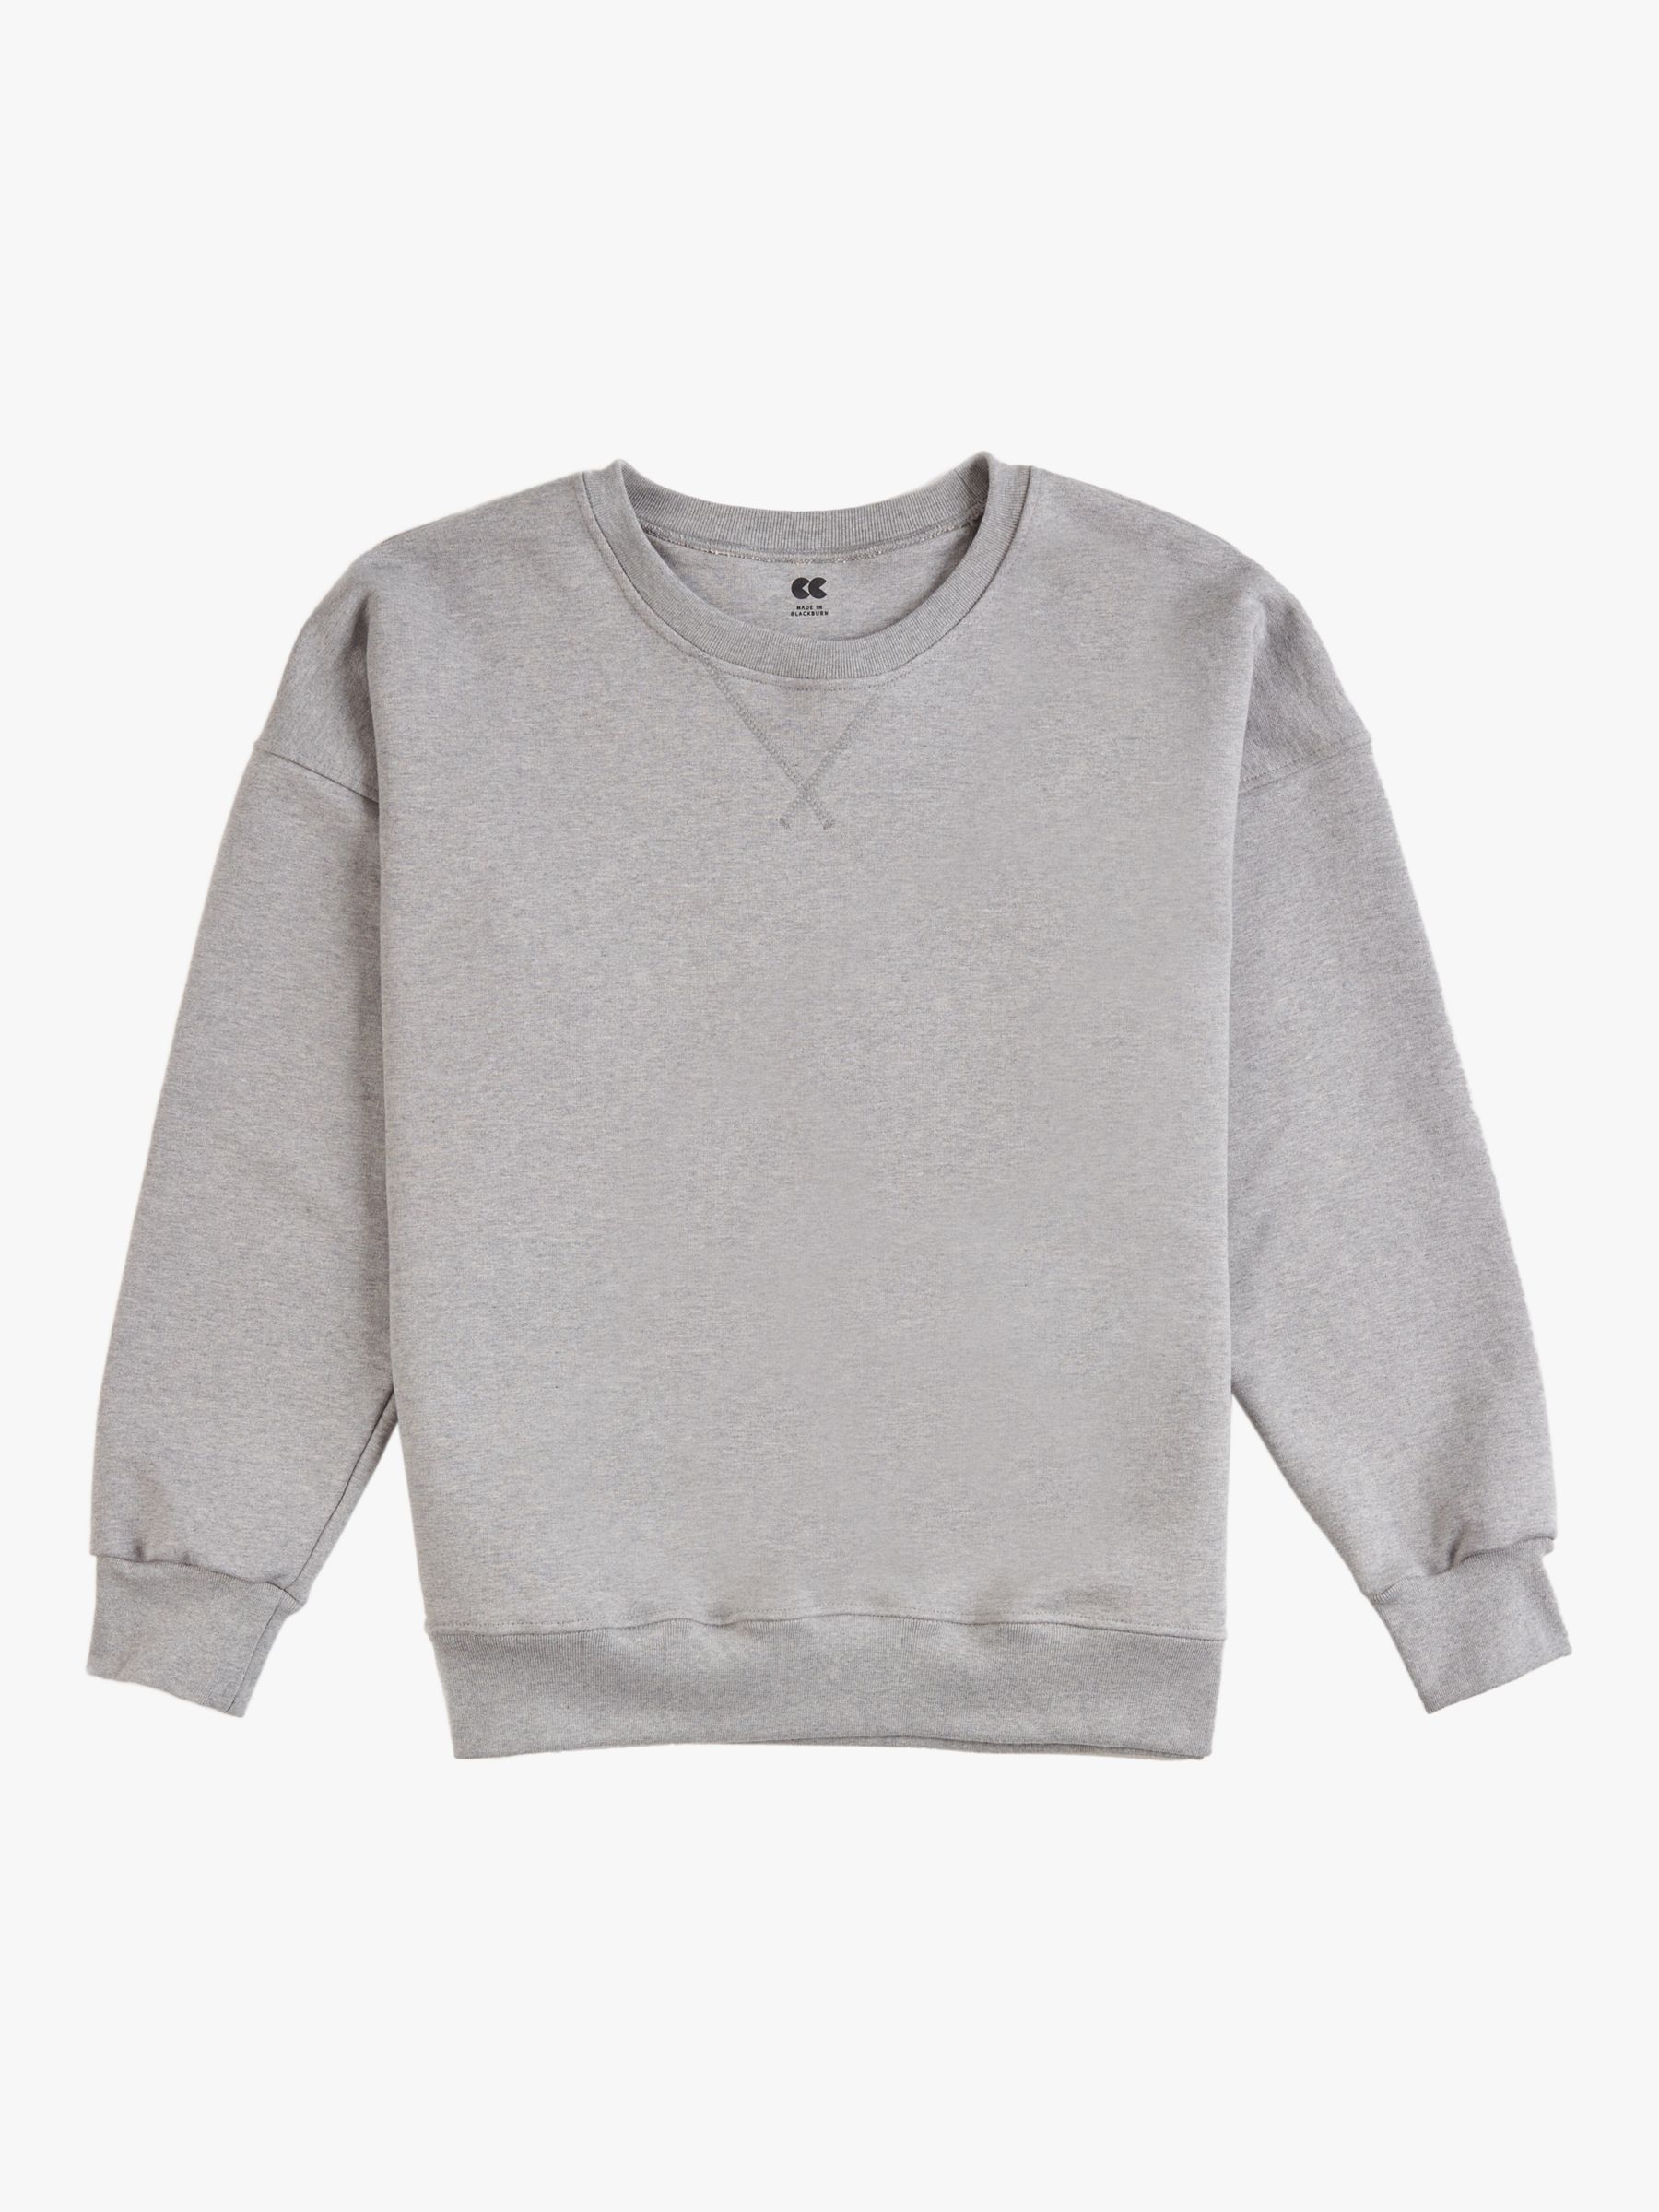 Community Clothing Cotton Crew Drop Shoulder Sweatshirt, Grey Marl, S